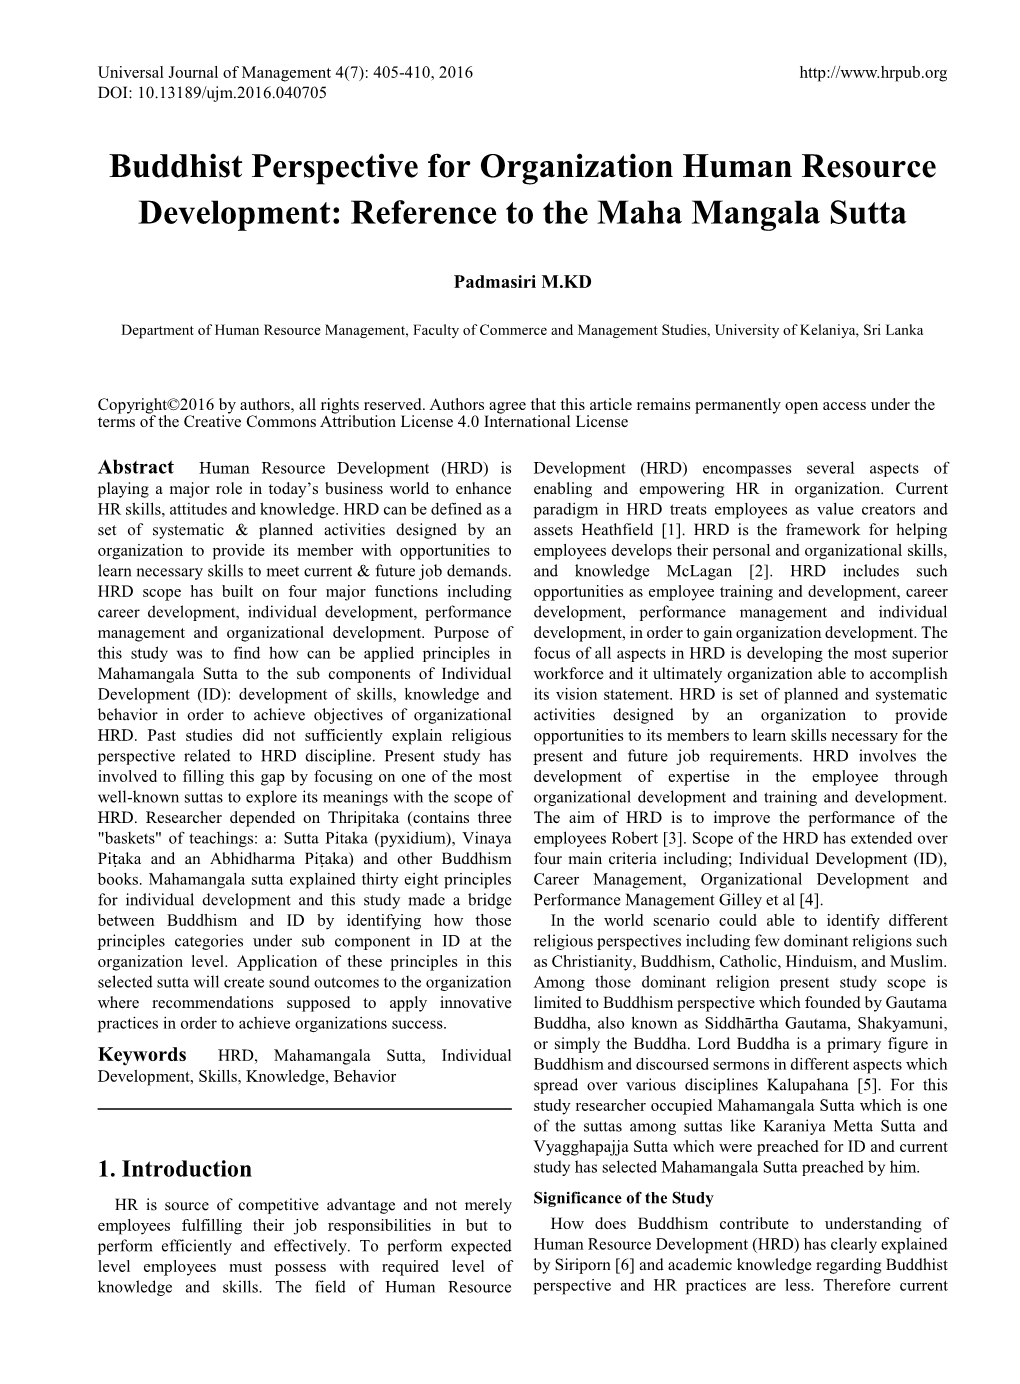 Buddhist Perspective for Organization Human Resource Development: Reference to the Maha Mangala Sutta